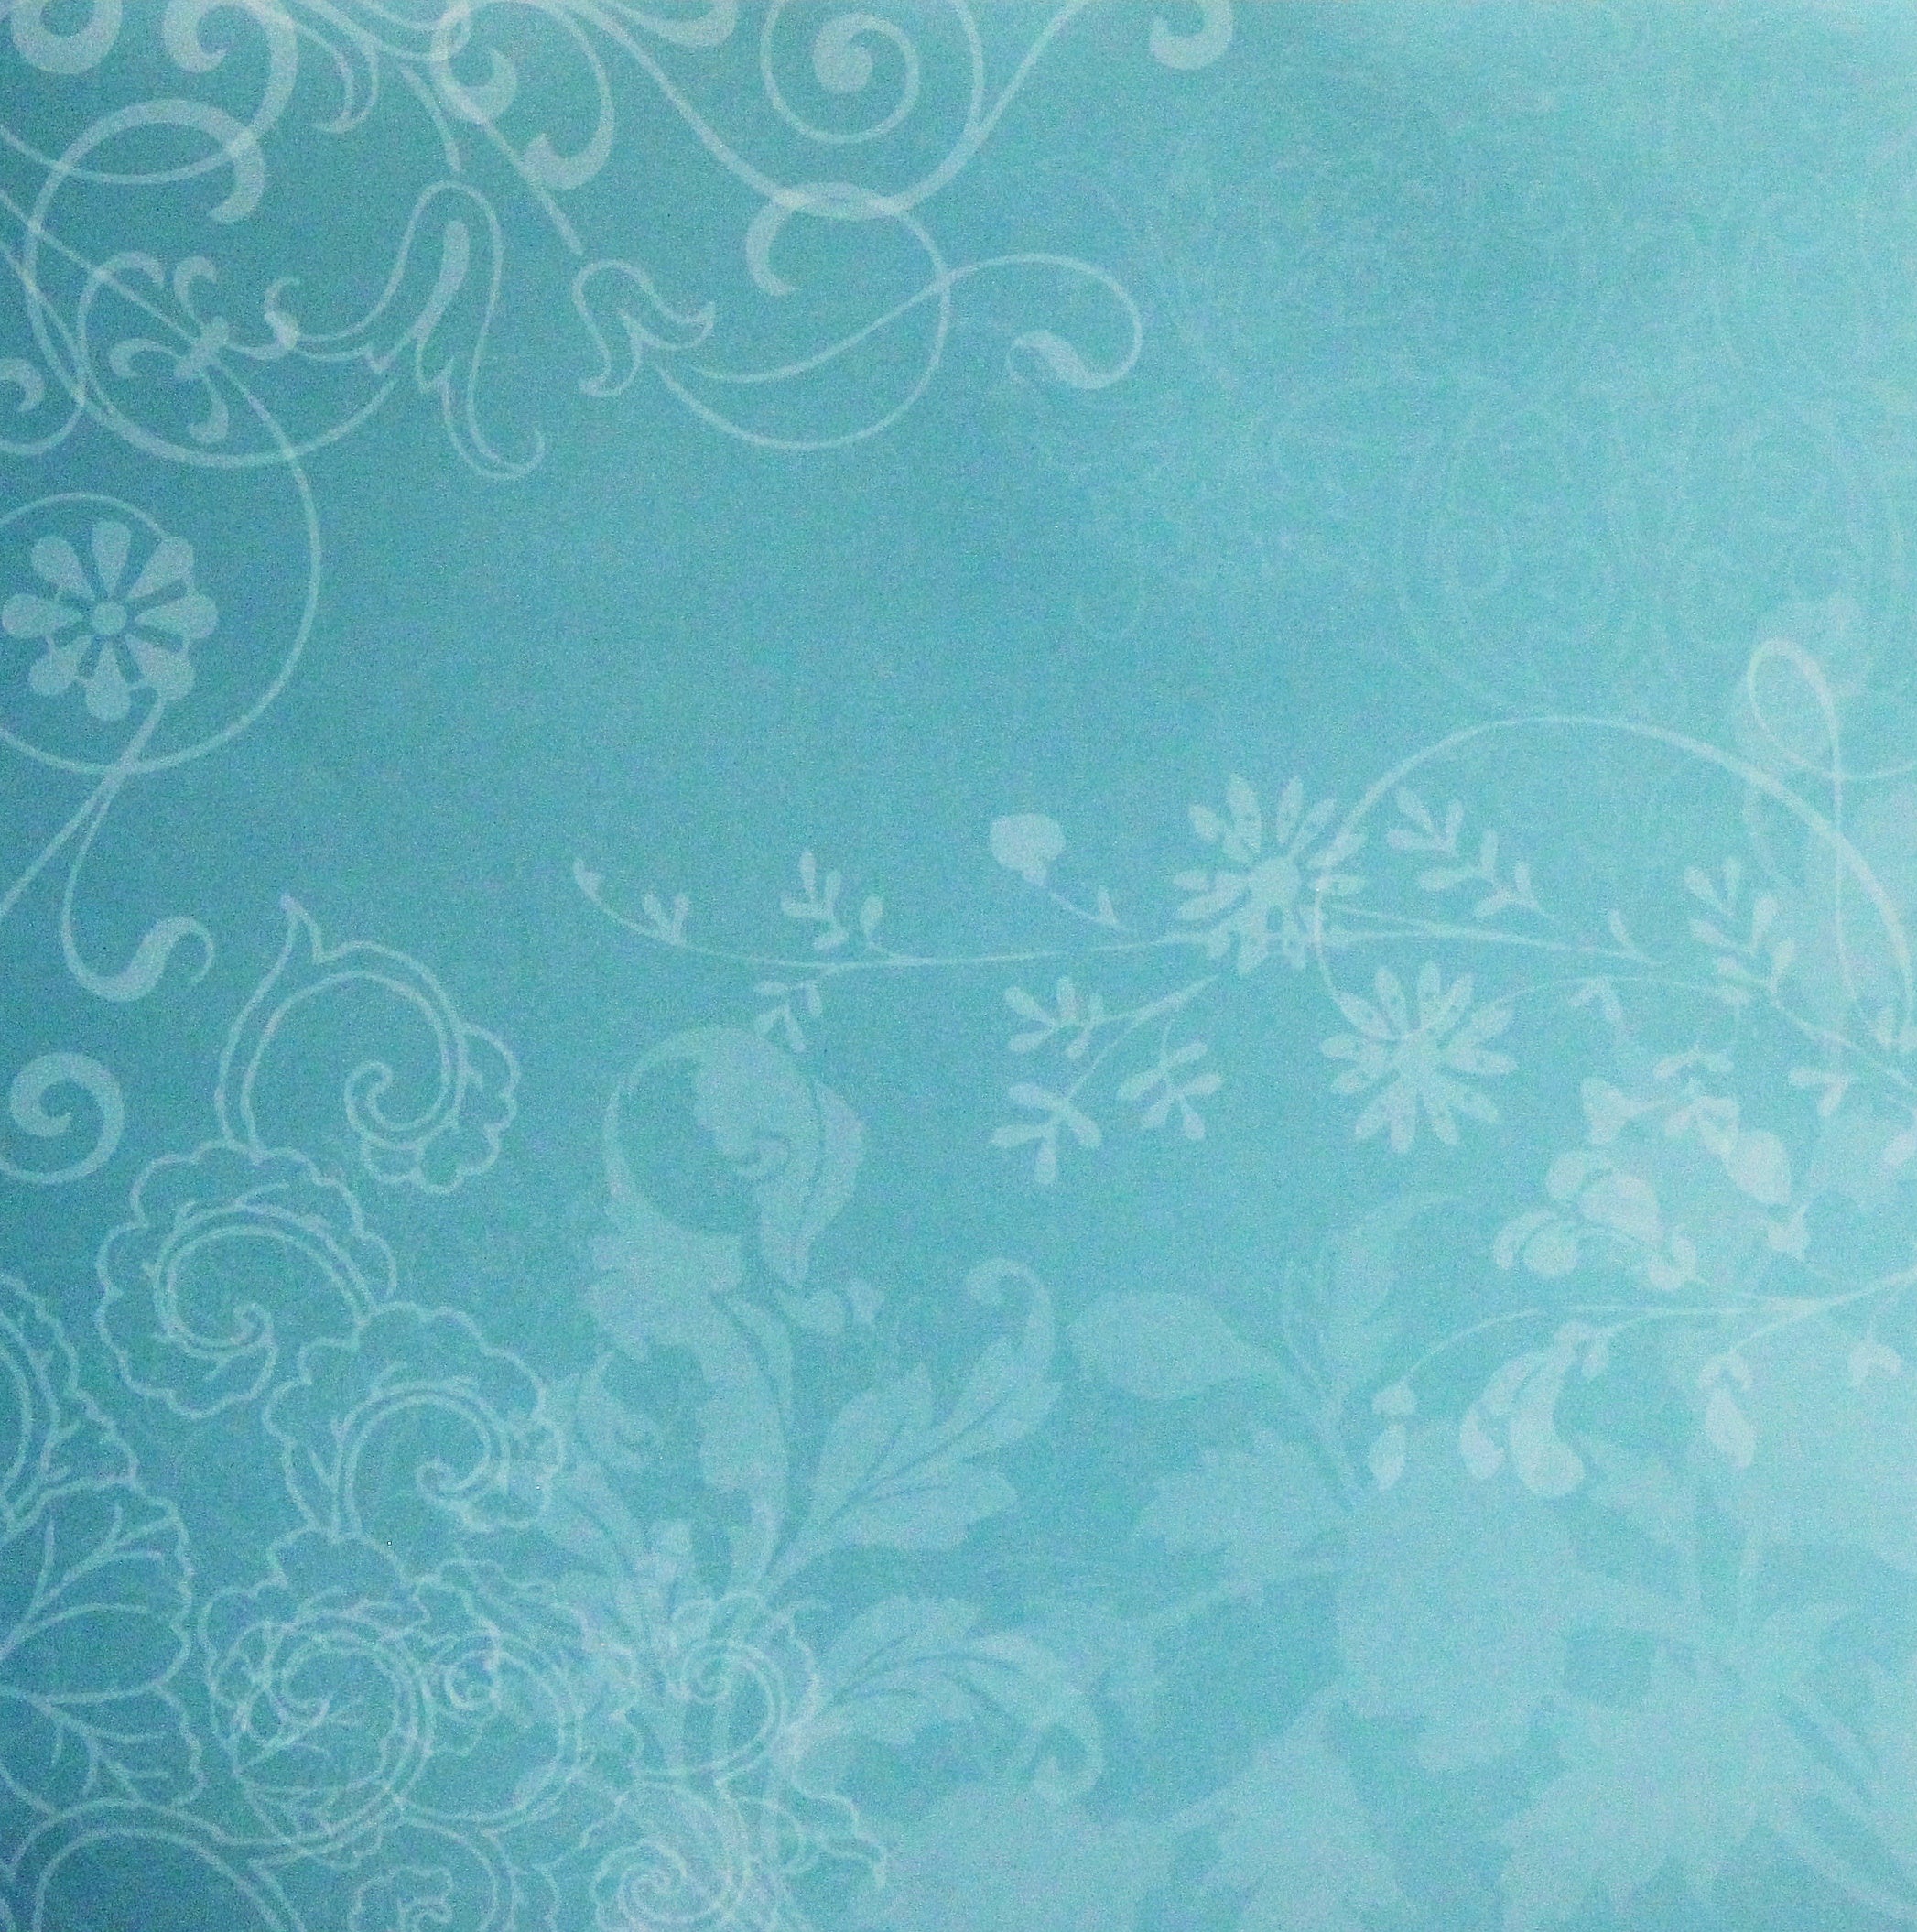 DCWV 12 X 12 Light Blue Floral Swirls Scrapbook Paper